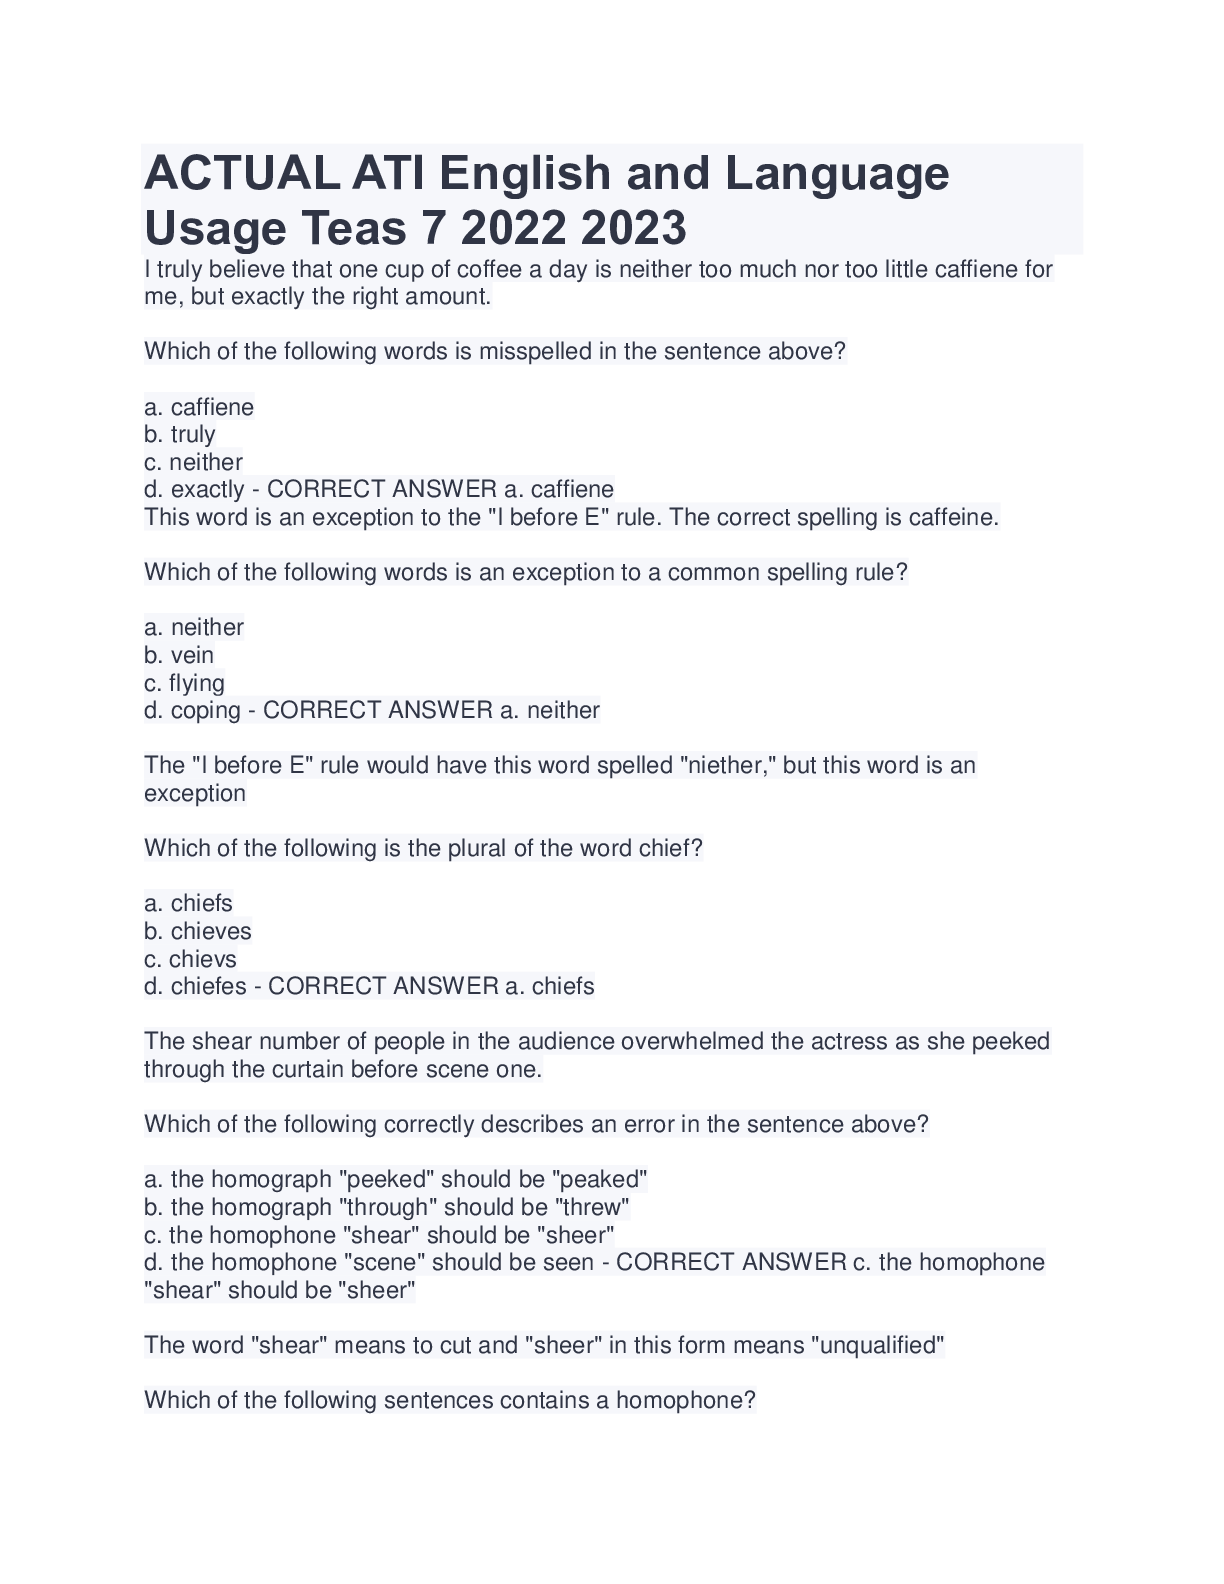 ACTUAL ATI English and Language Usage Teas 7 2022 2023 Browsegrades